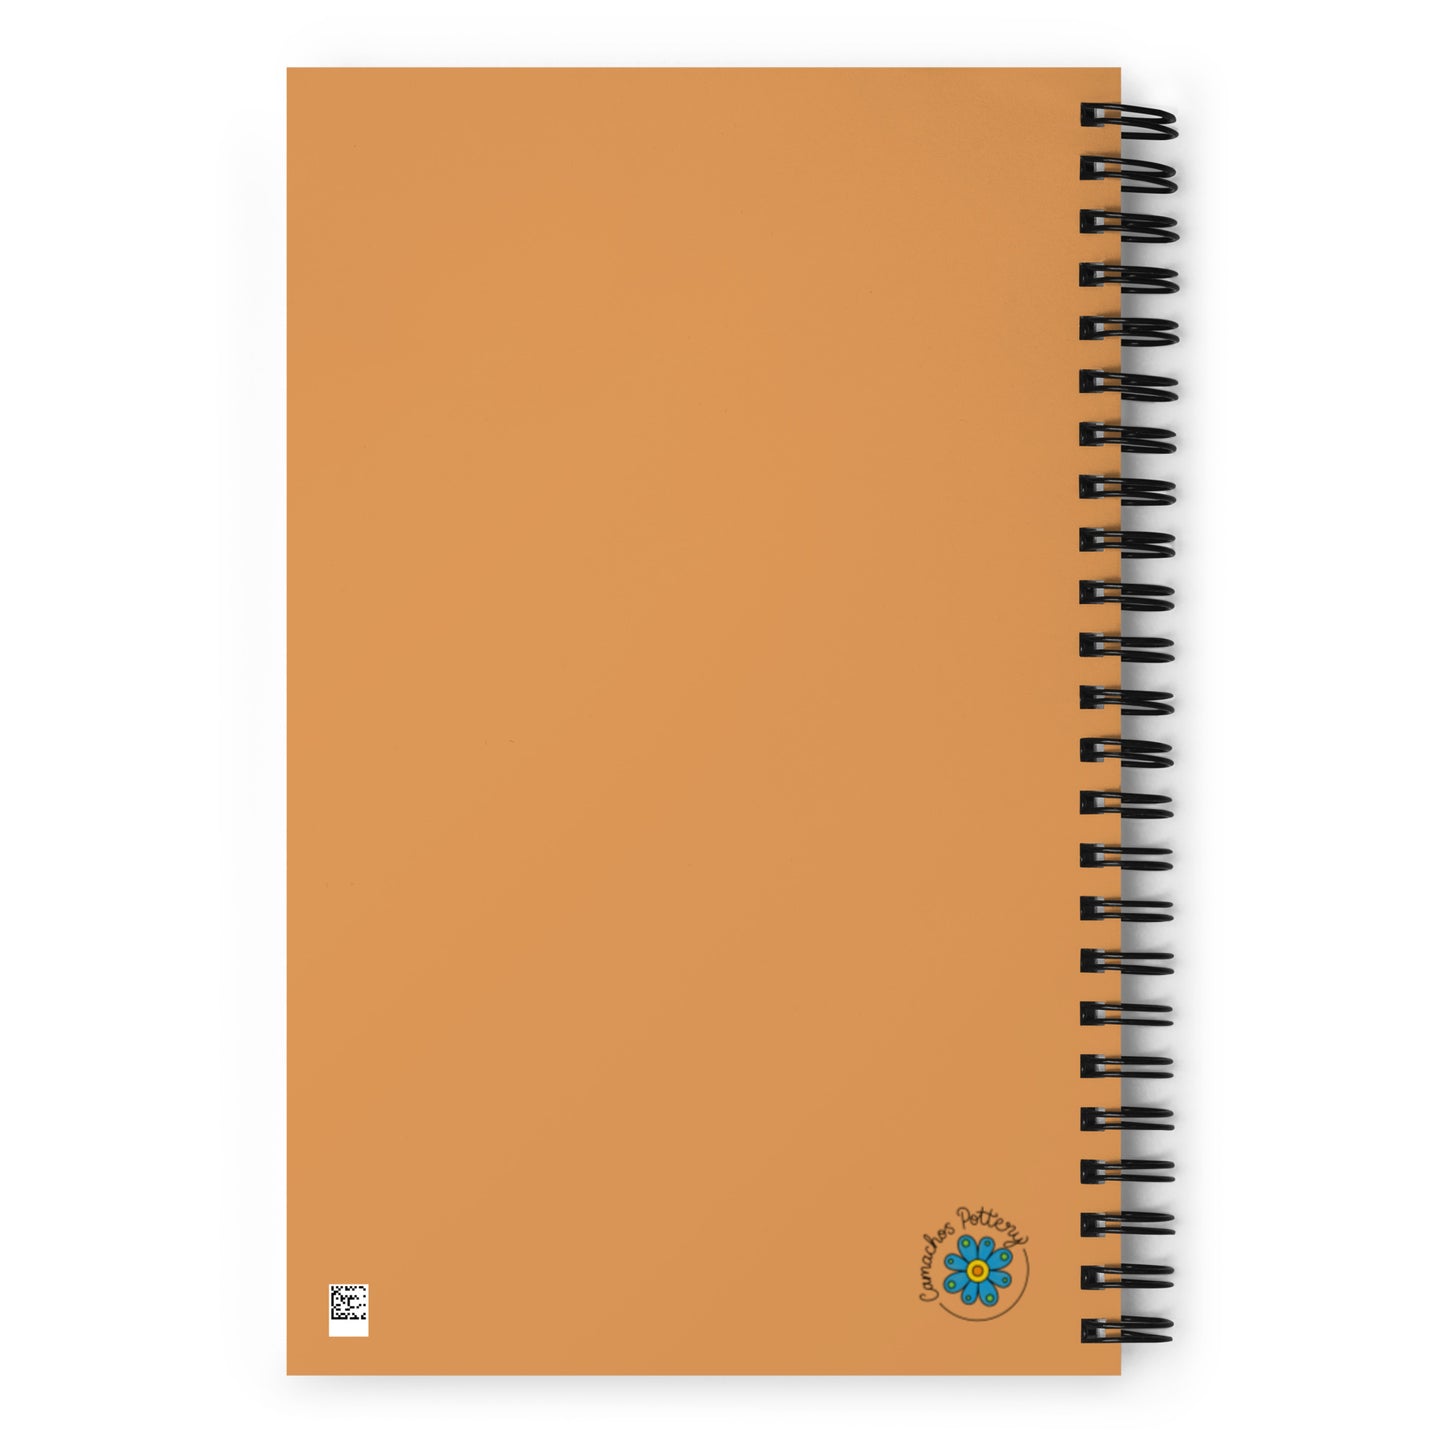 Orange and Black Spiral notebook